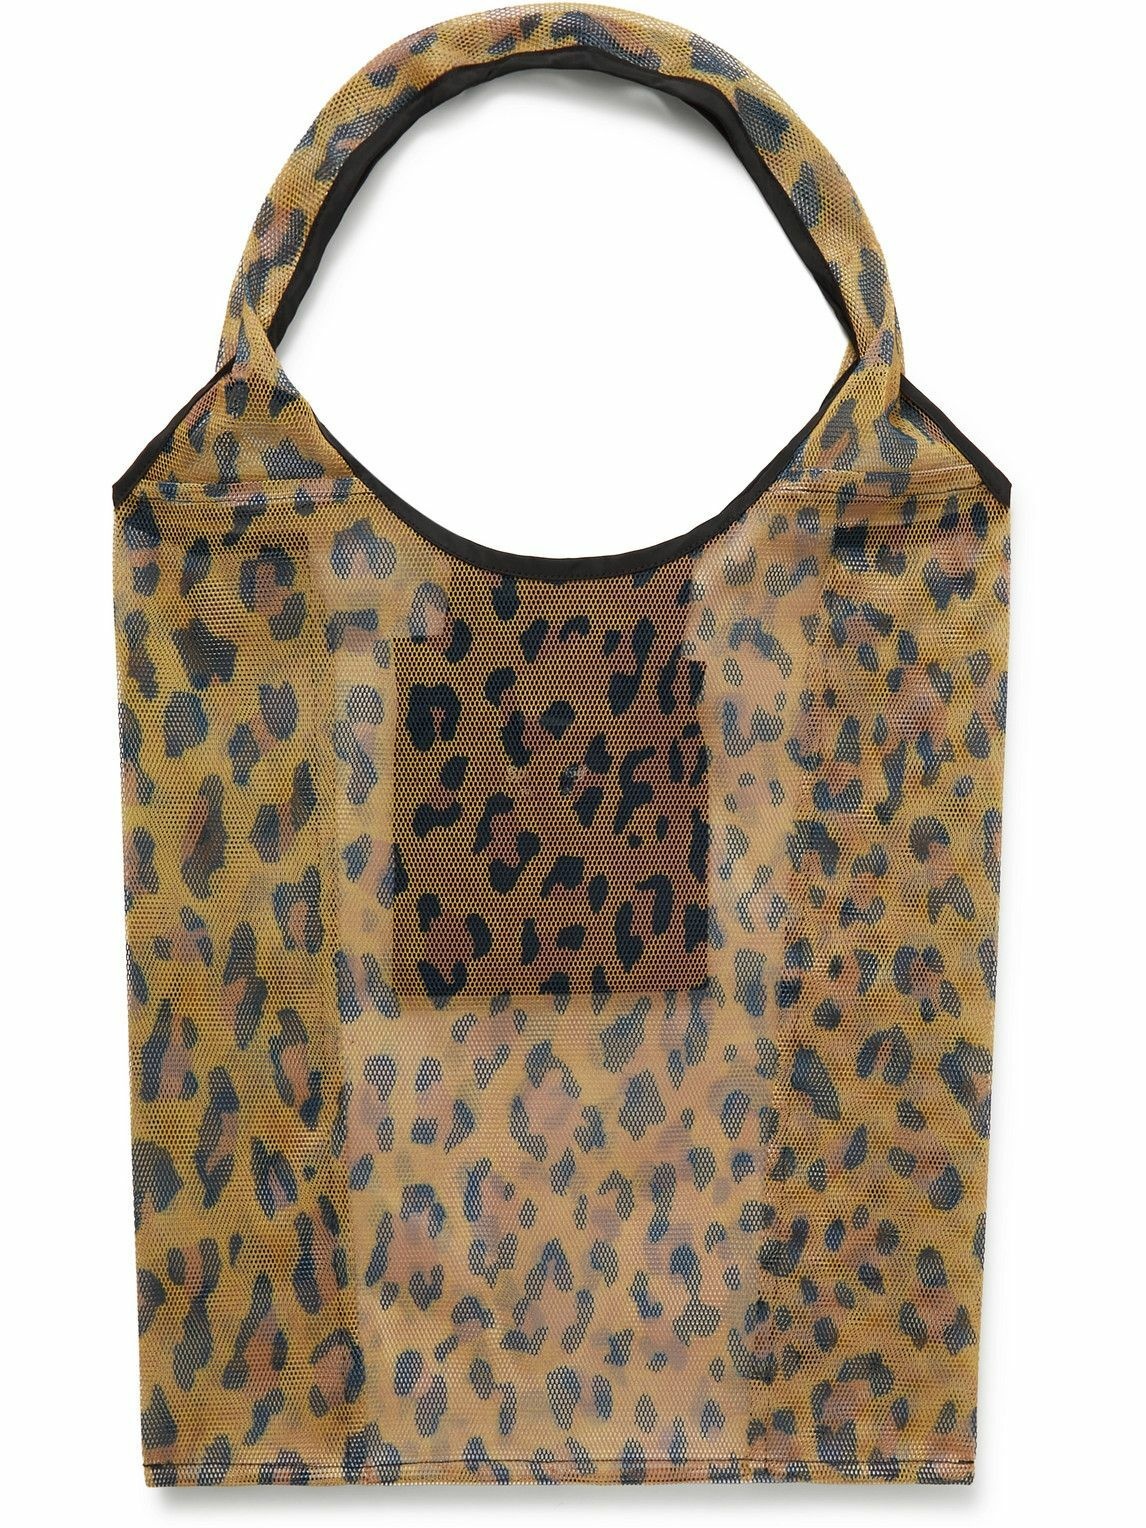 Maison Margiela Leopard-Print Tote Bag - Brown